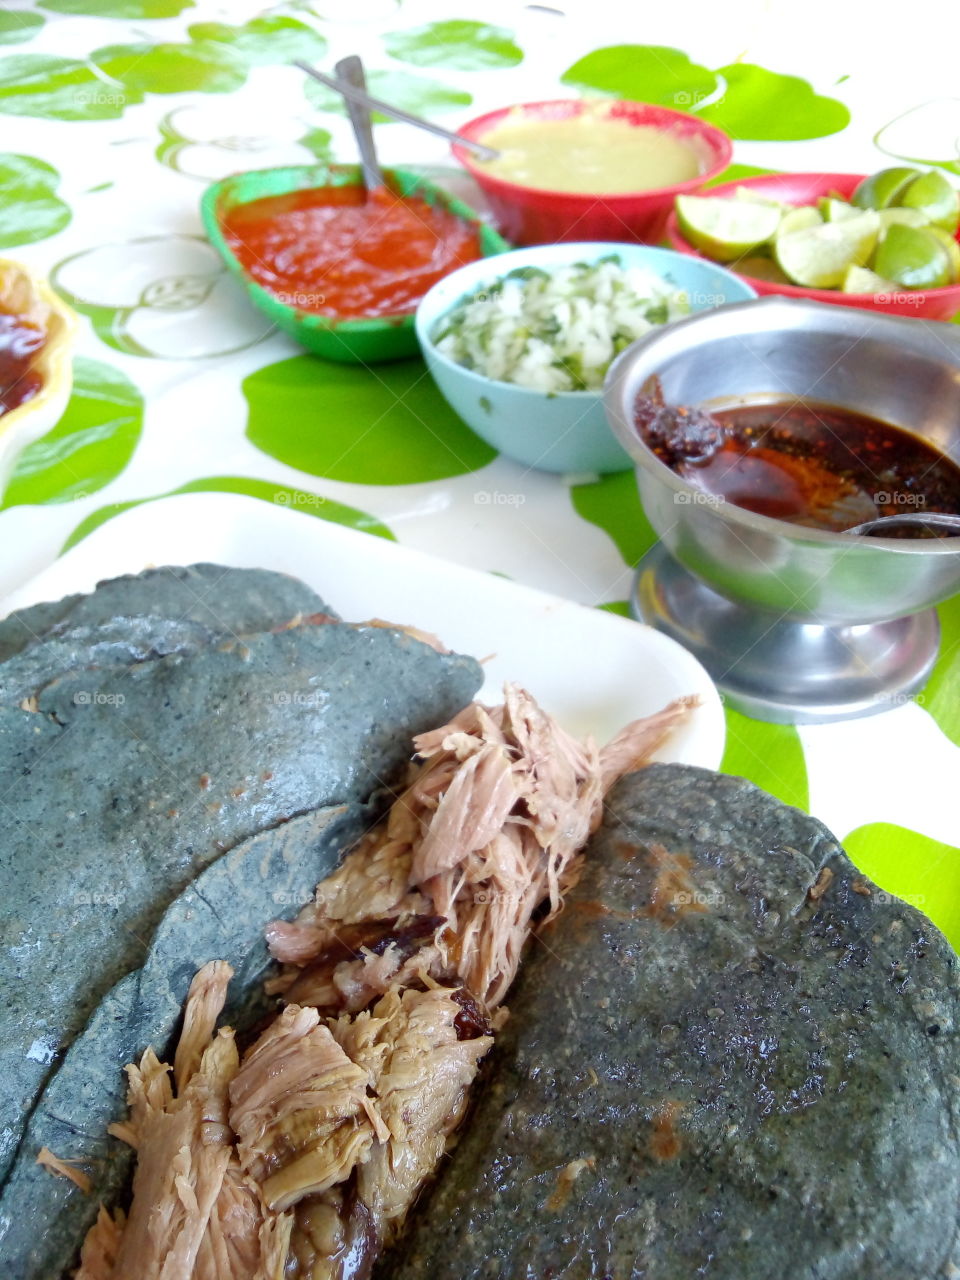 tacos de barbacoa de borrego con tortilla azul hecha a mano, de fondo salsas, limones y condimentos